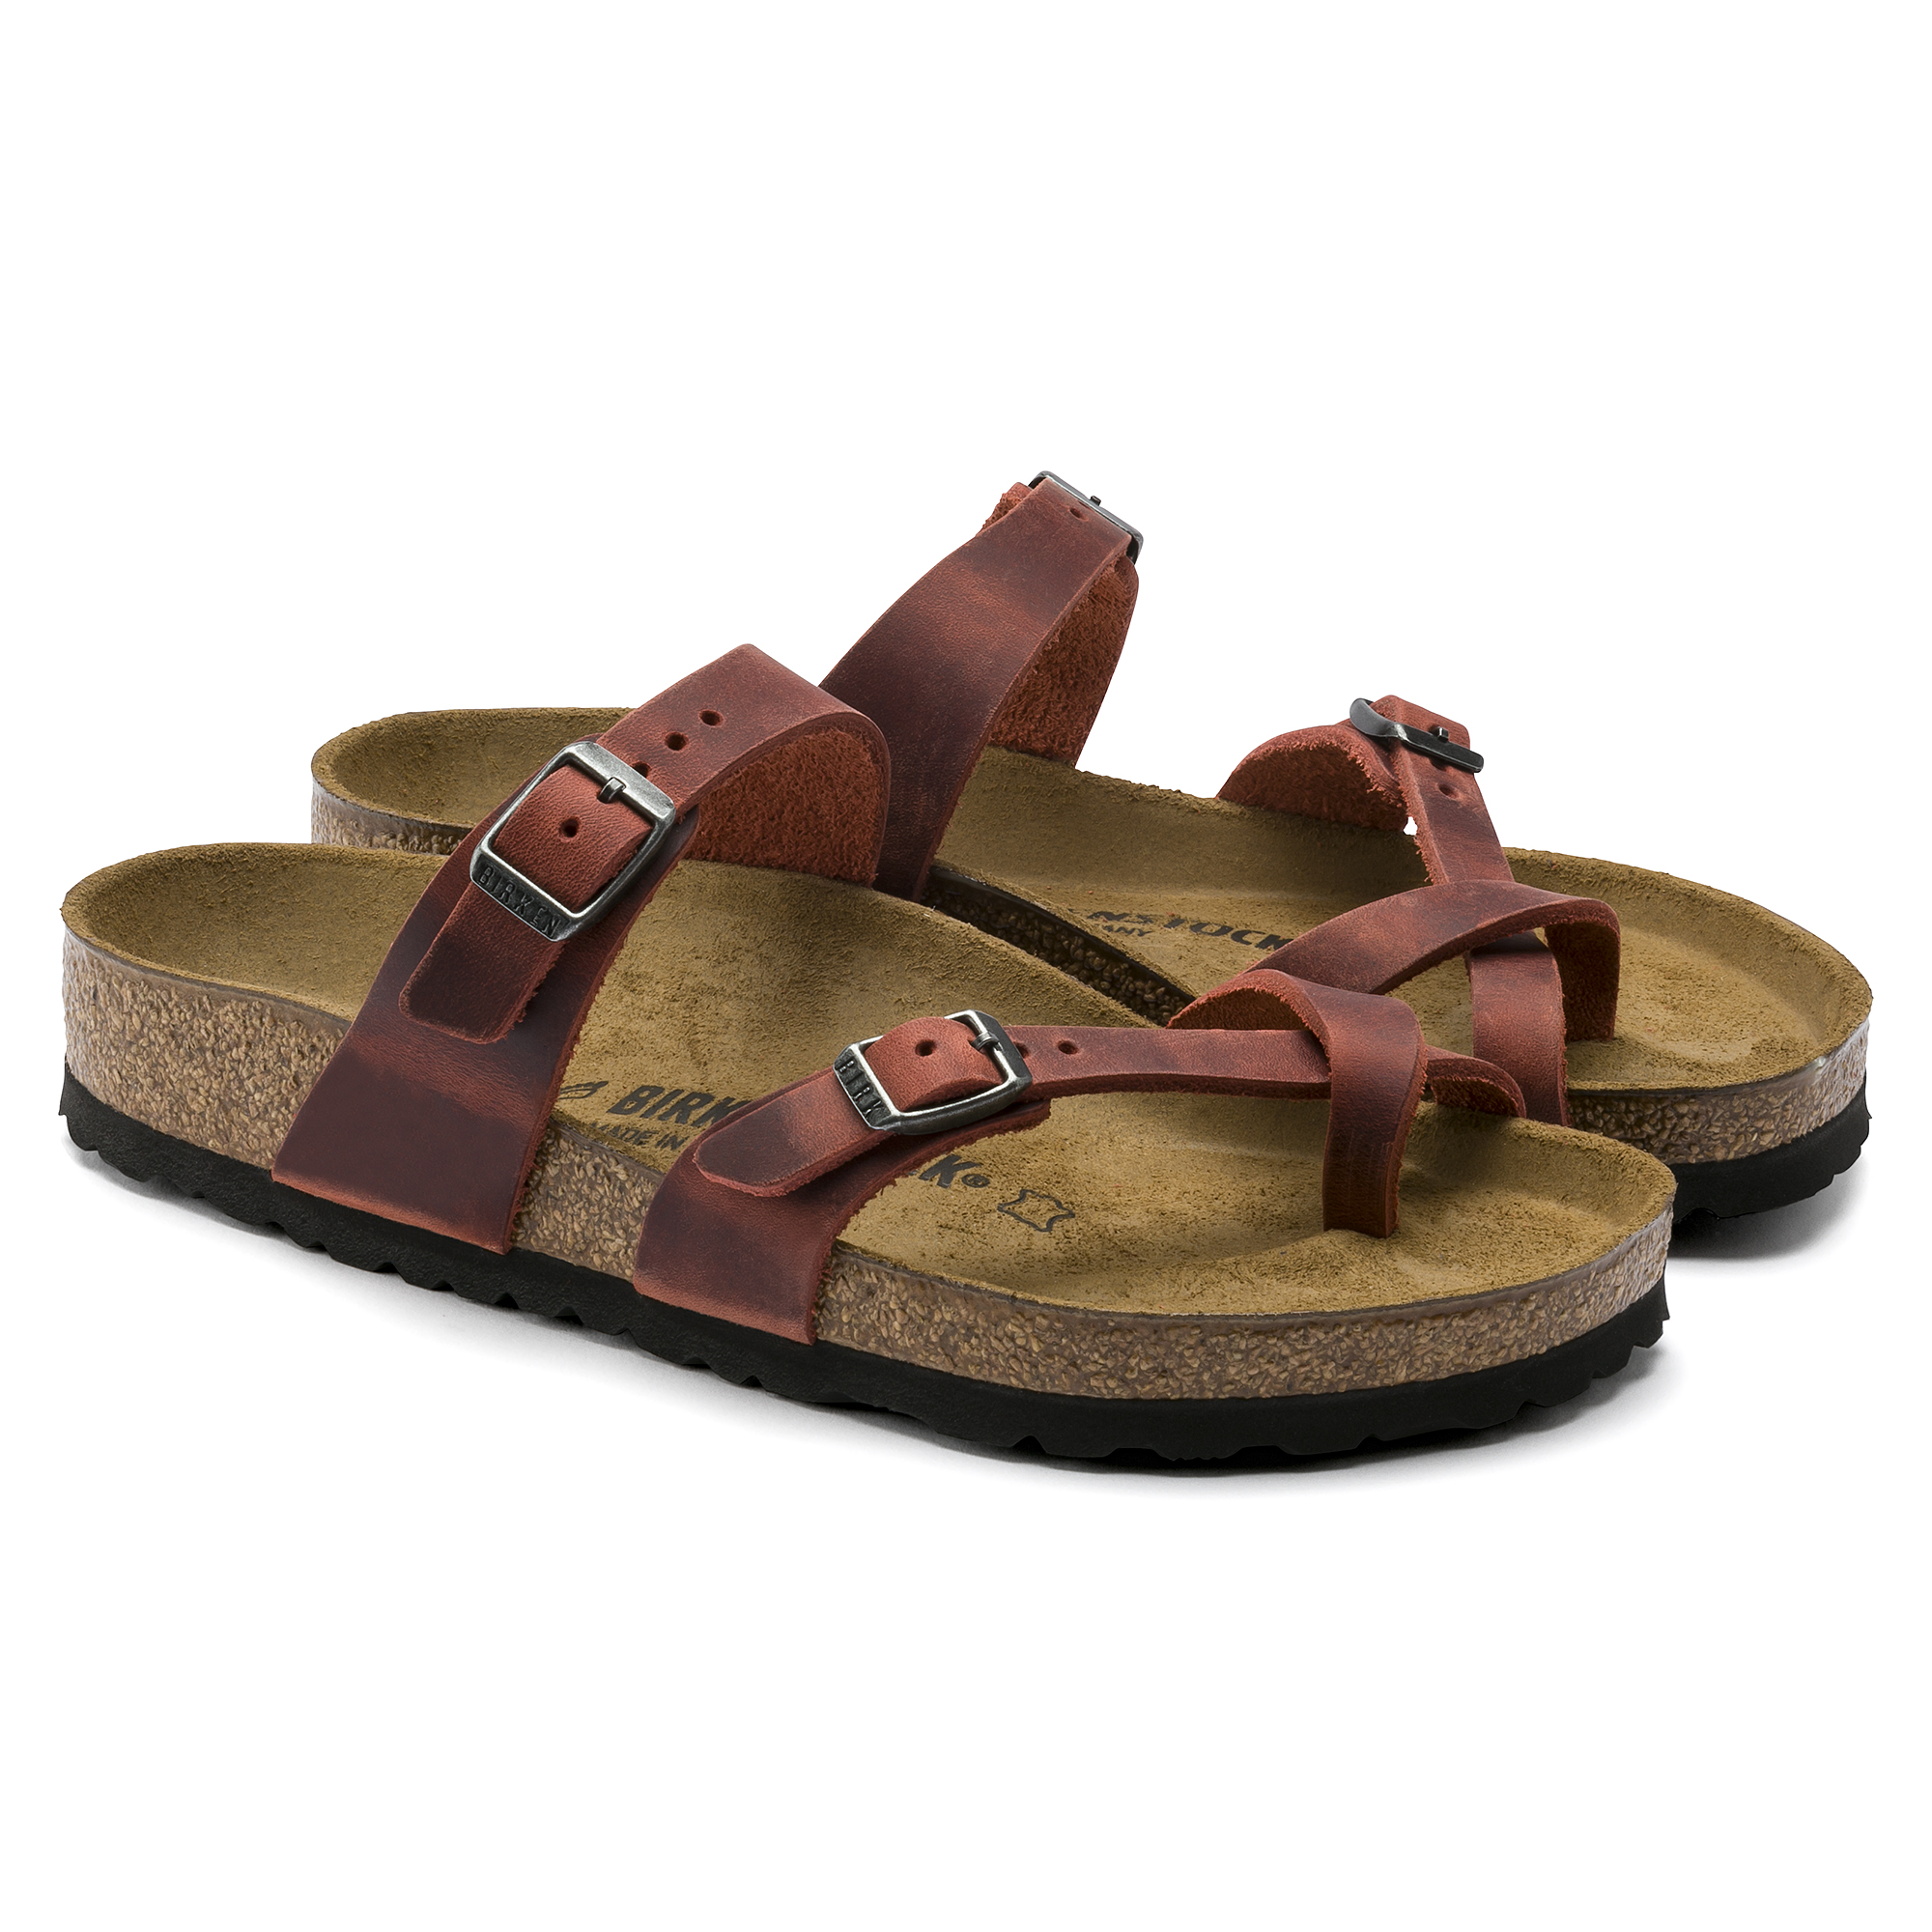 red mayari birkenstock sandals